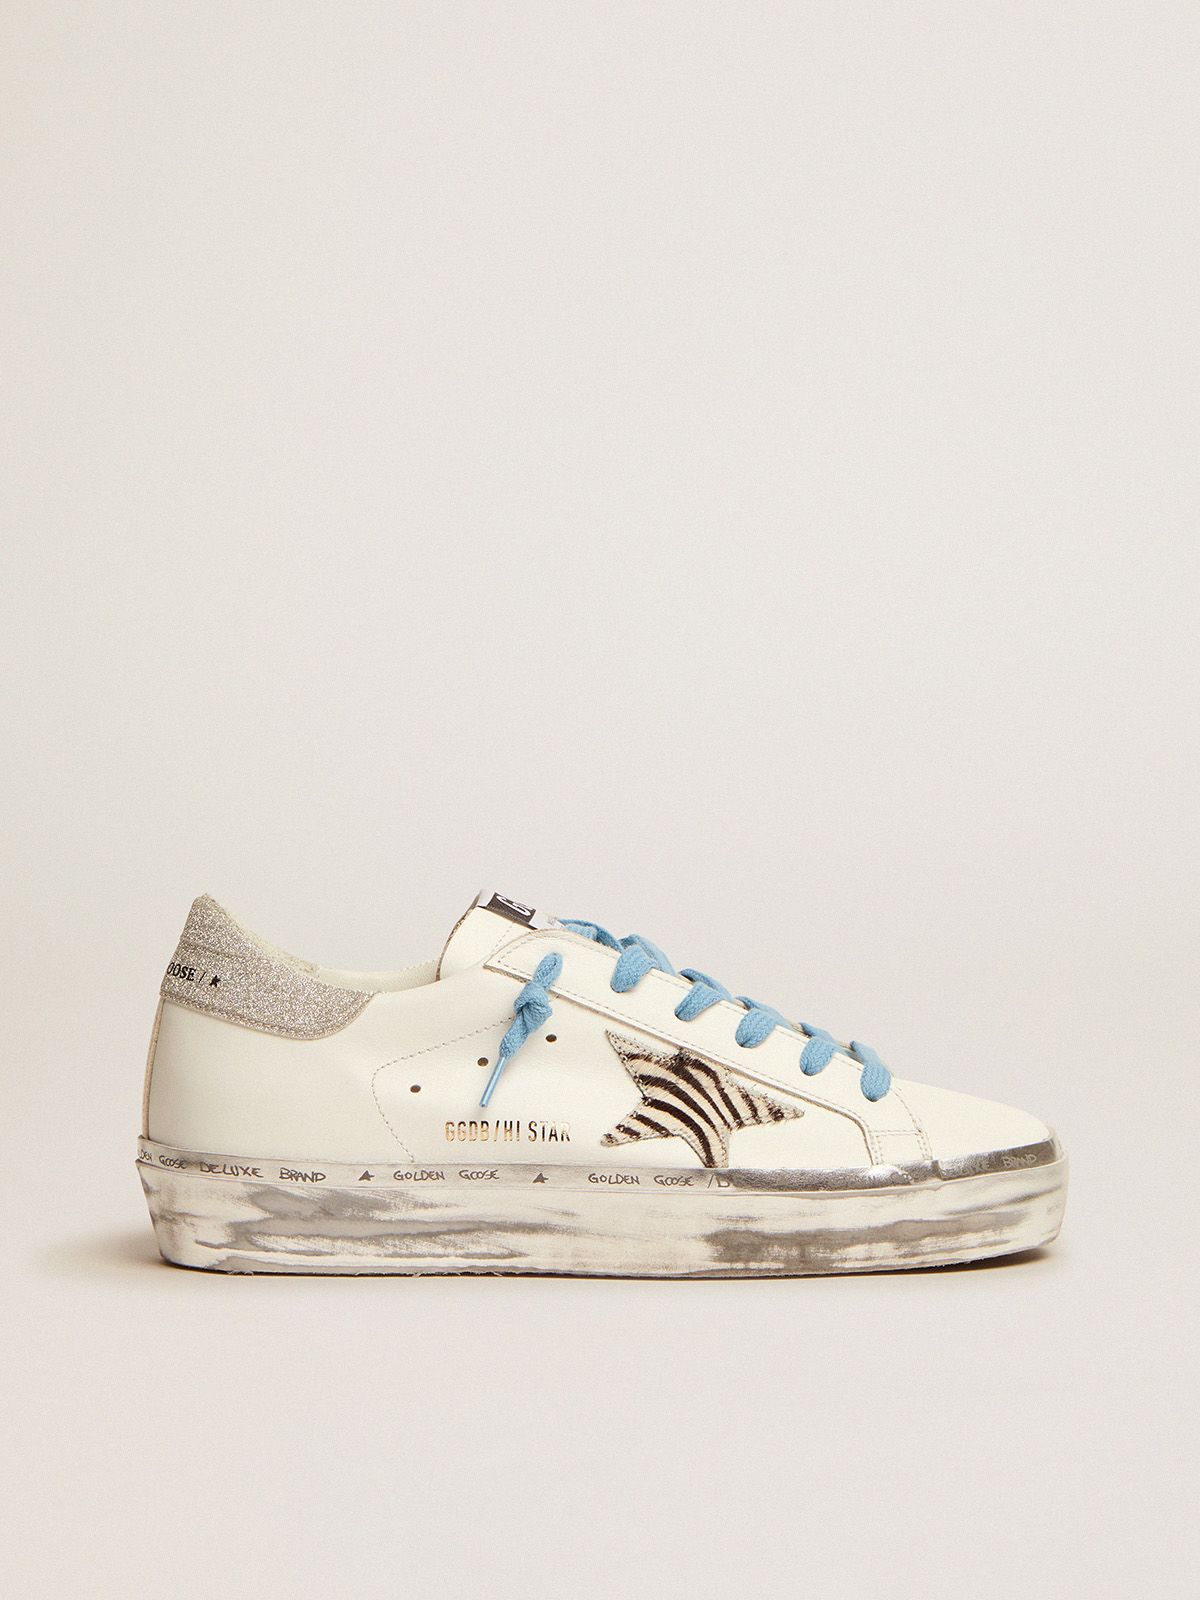 Hi Star sneakers with zebra-print pony skin star and silver glitter heel tab